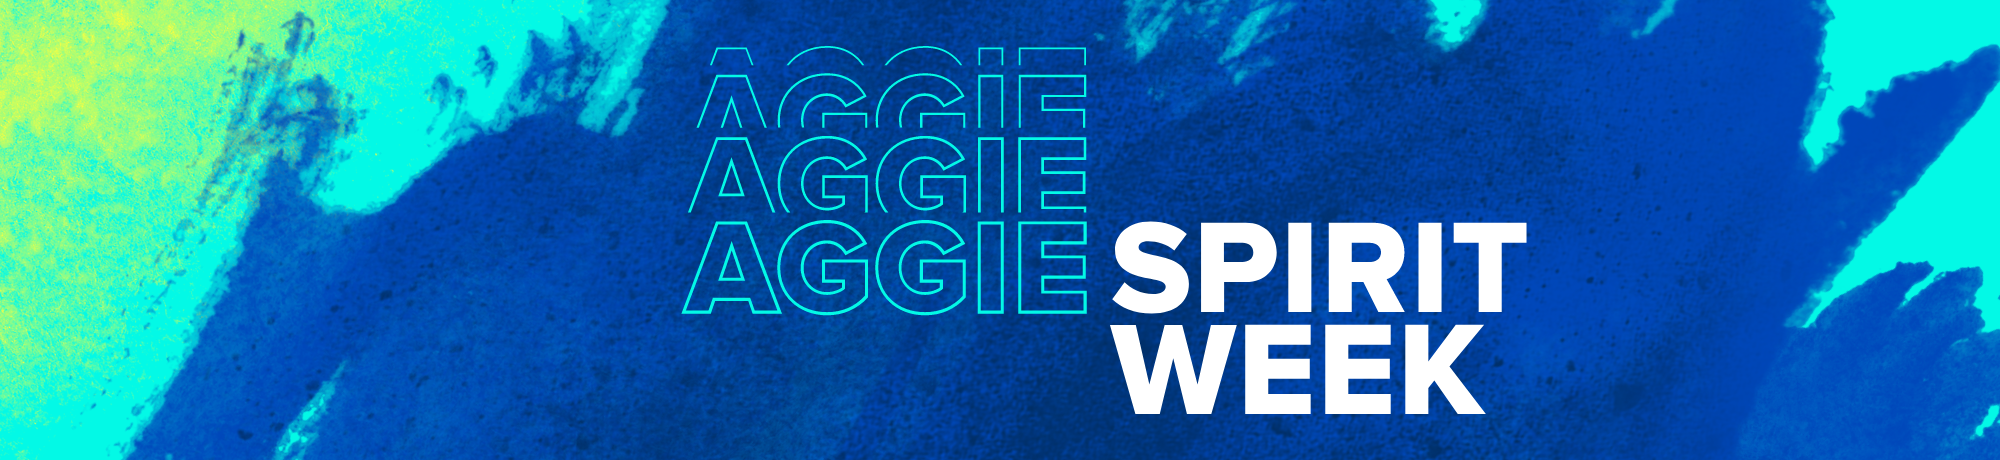 Aggie Spirit Week